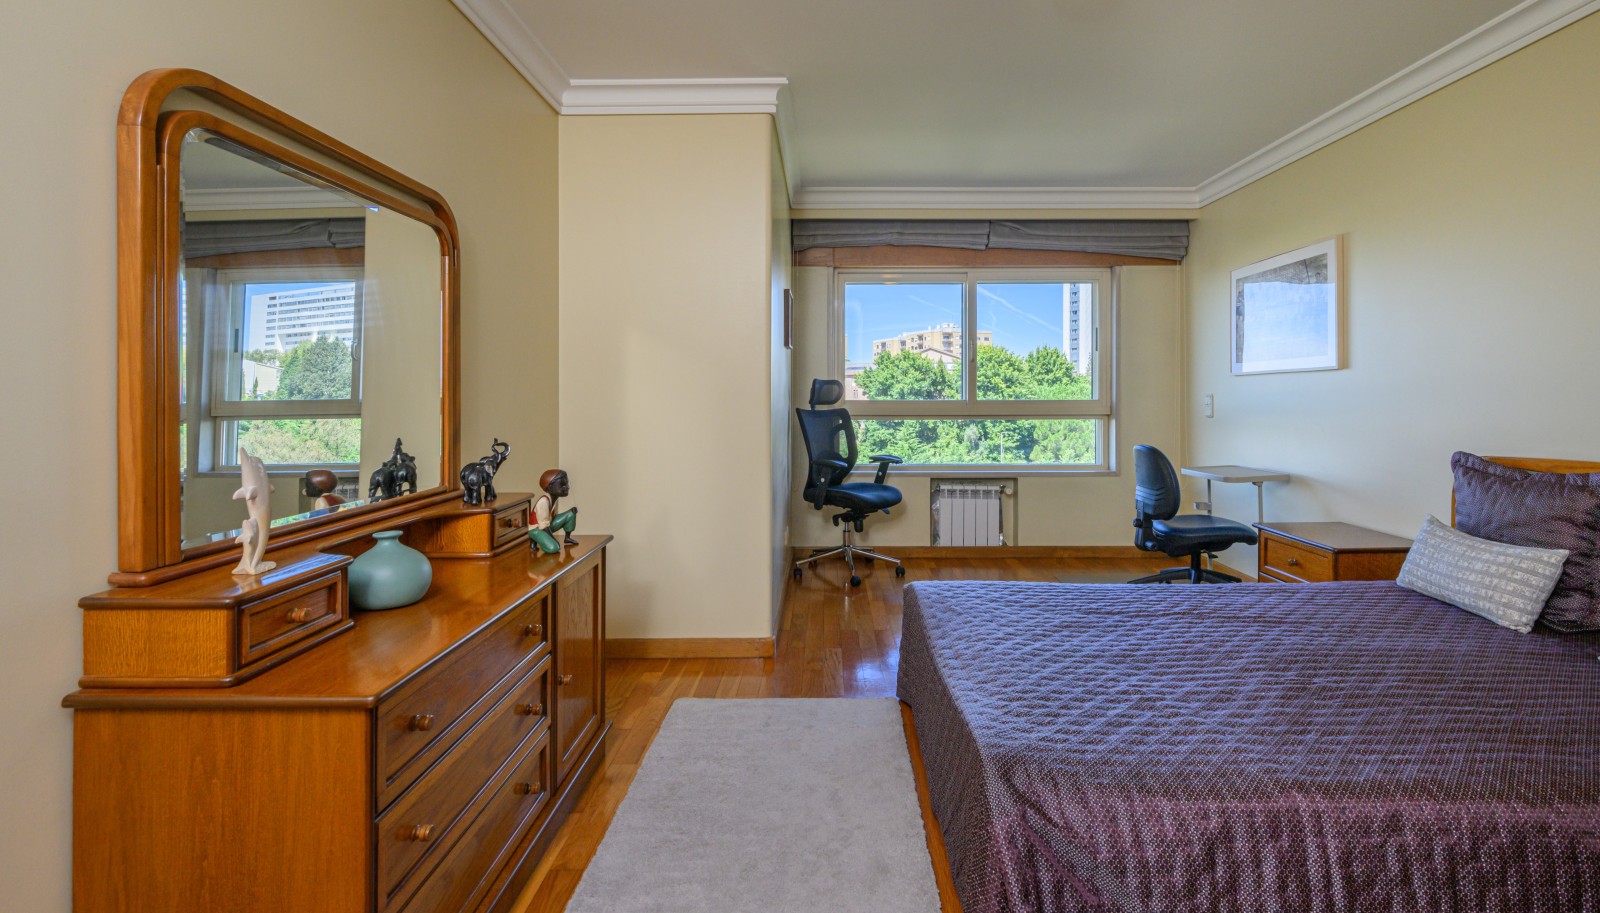 Appartement de 5 chambres avec balcon, à vendre, à V. N. Gaia, Porto, Portugal_236322